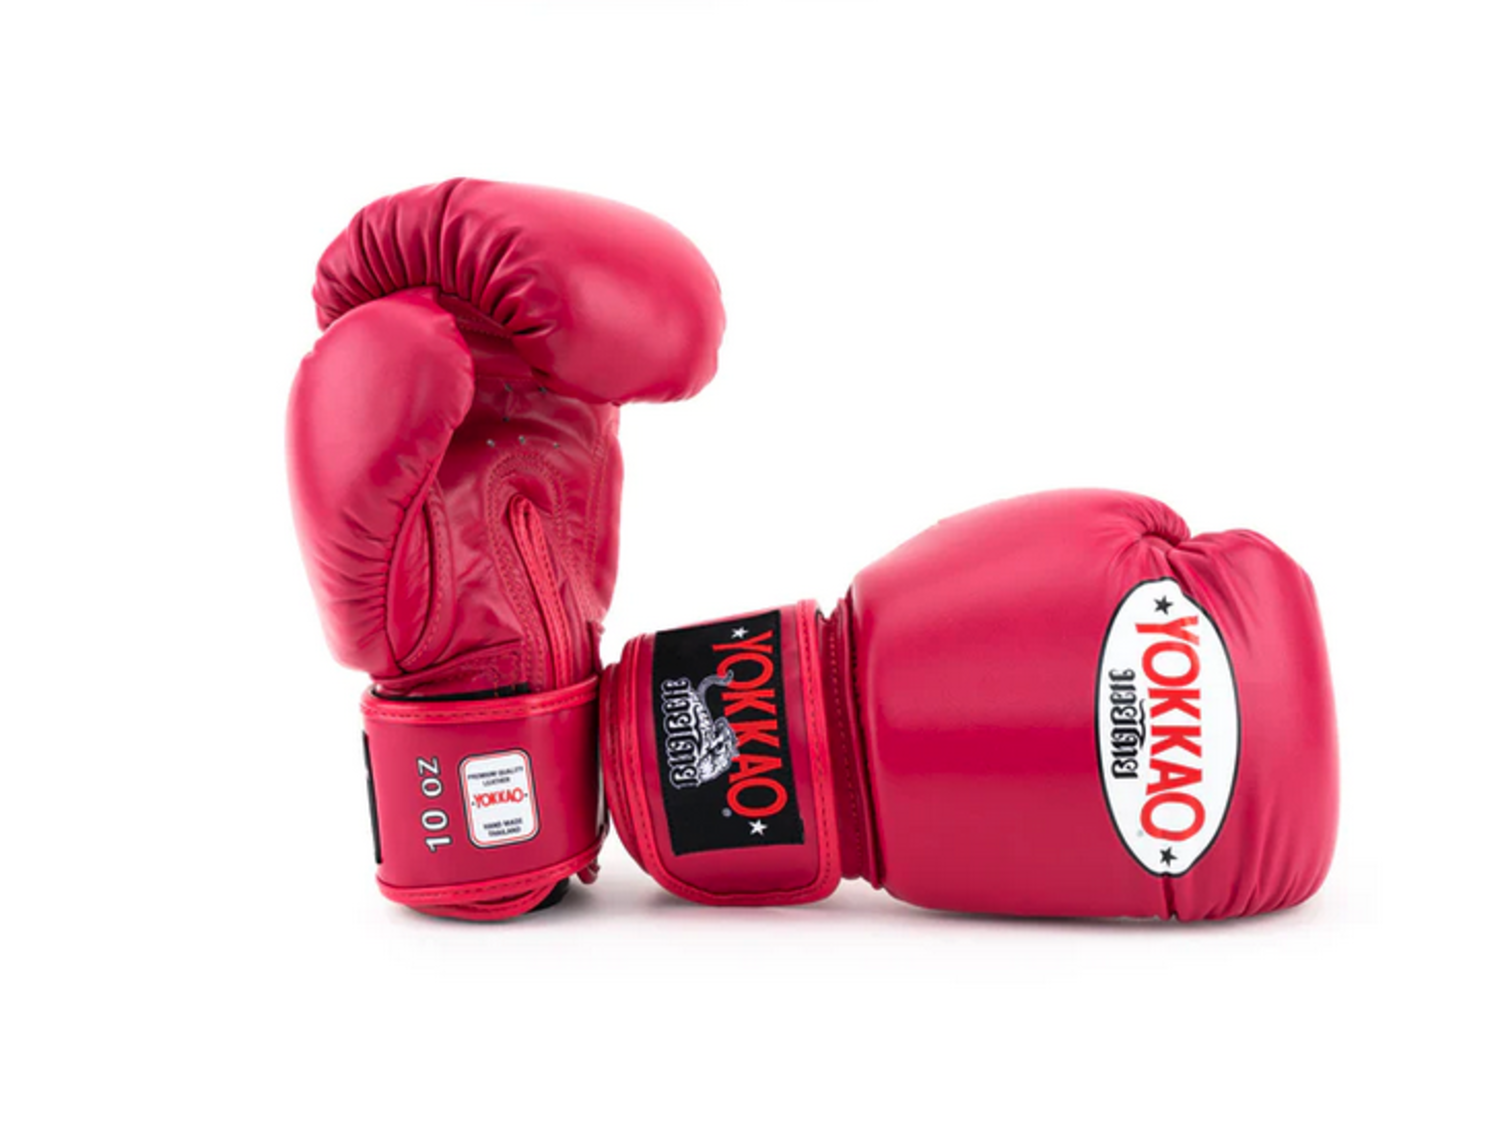 Yokkao Boxing Gloves Cherry - Enso Martial Arts Shop Bristol